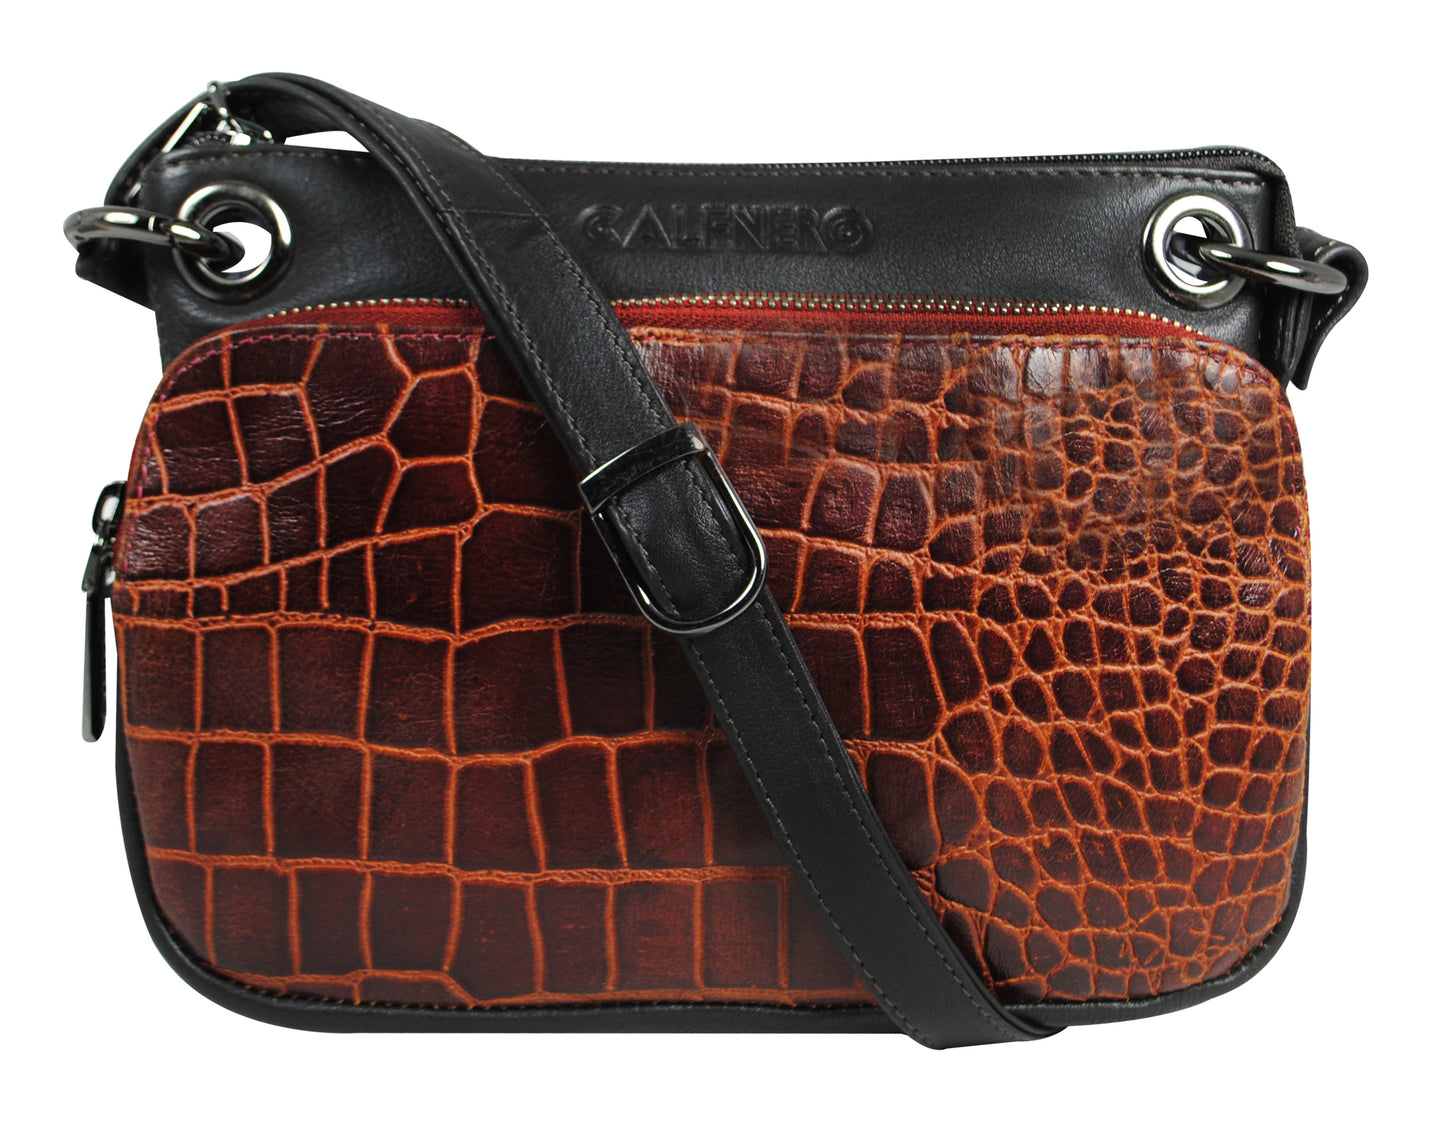 Calfnero Genuine Leather Women's Sling Bag (WS-04-Brown)